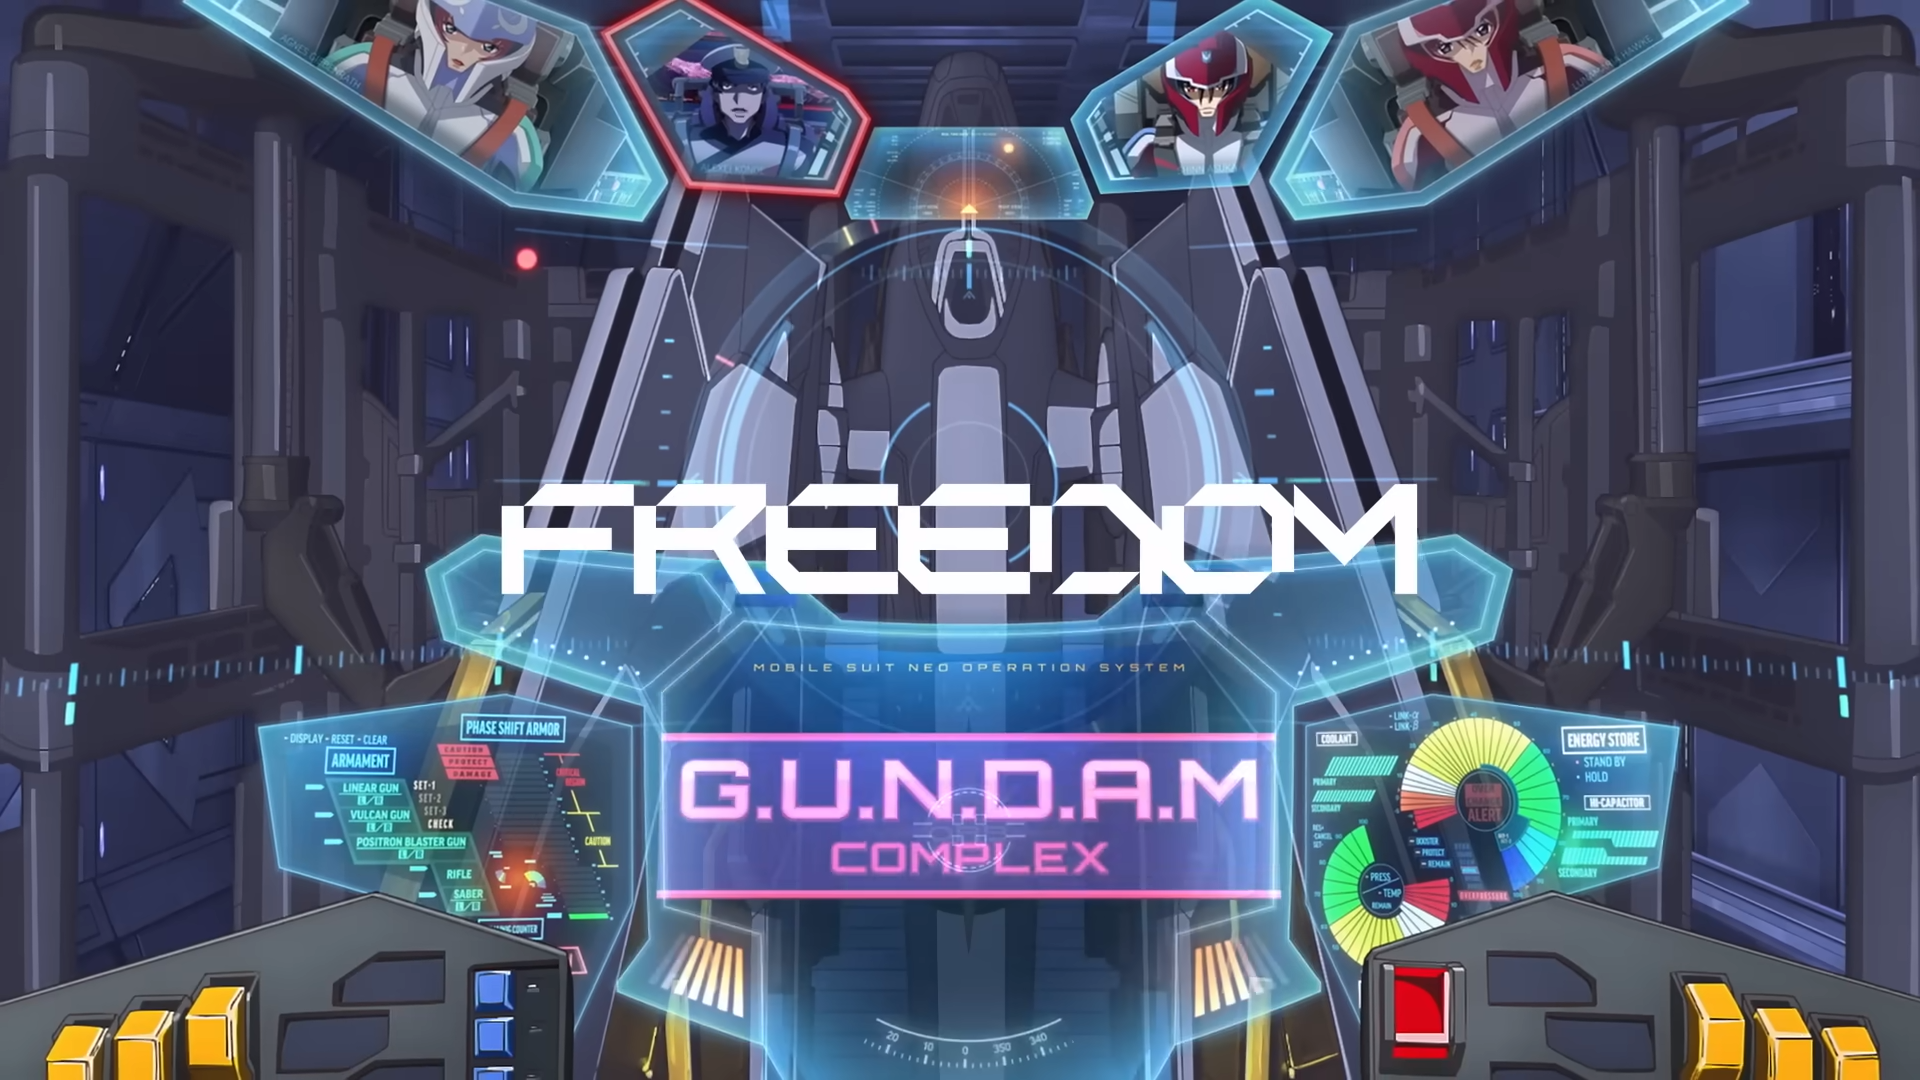 Gundam SEED FREEDOM vuelve al #1, Demon Slayer: Hashira Training Arc cae al #2